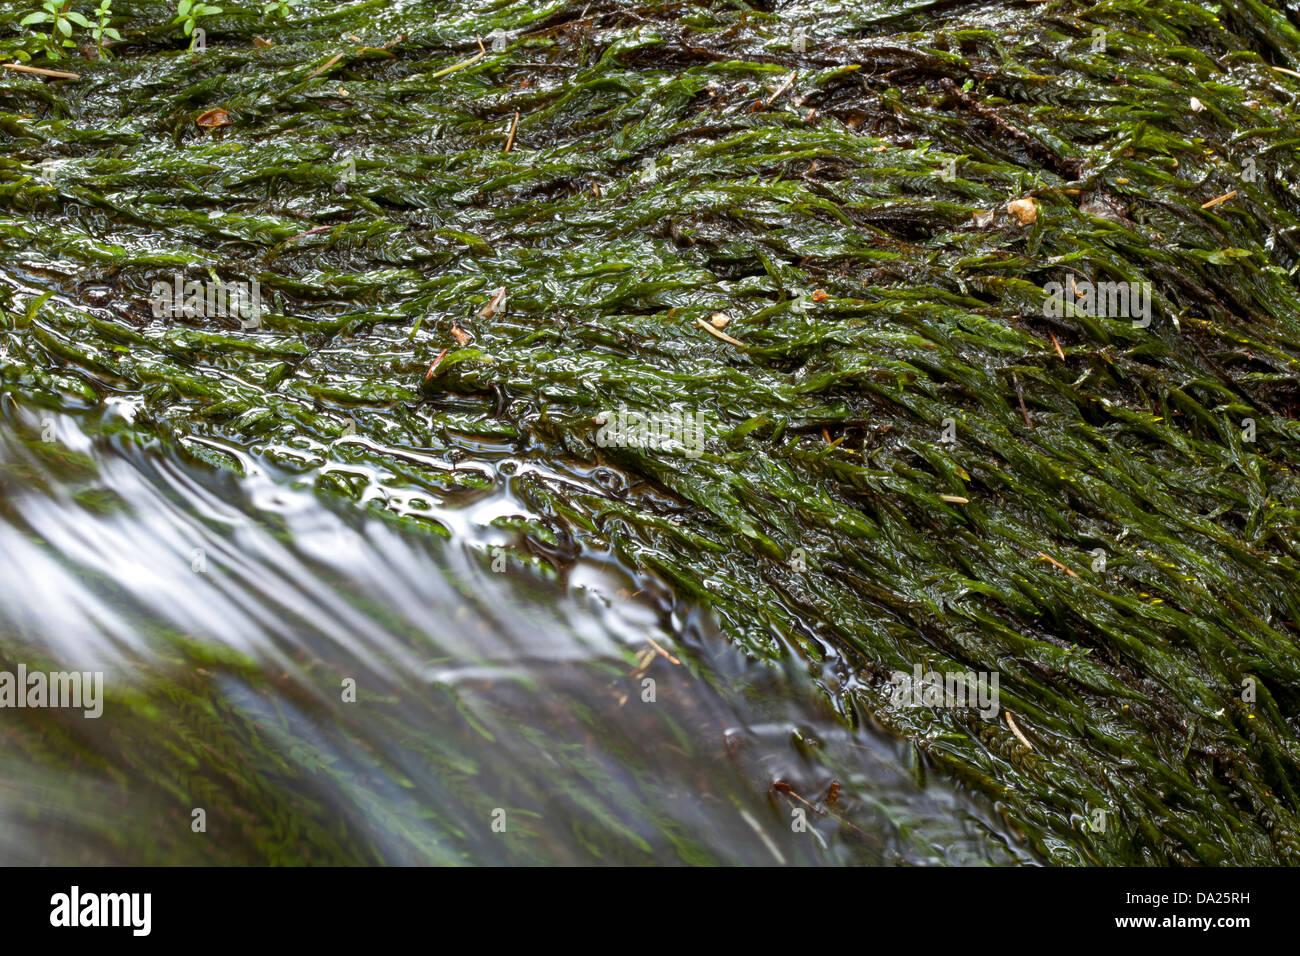 common-water-moss-fontinalis-antipyretica-in-a-stream-DA25RH.jpg